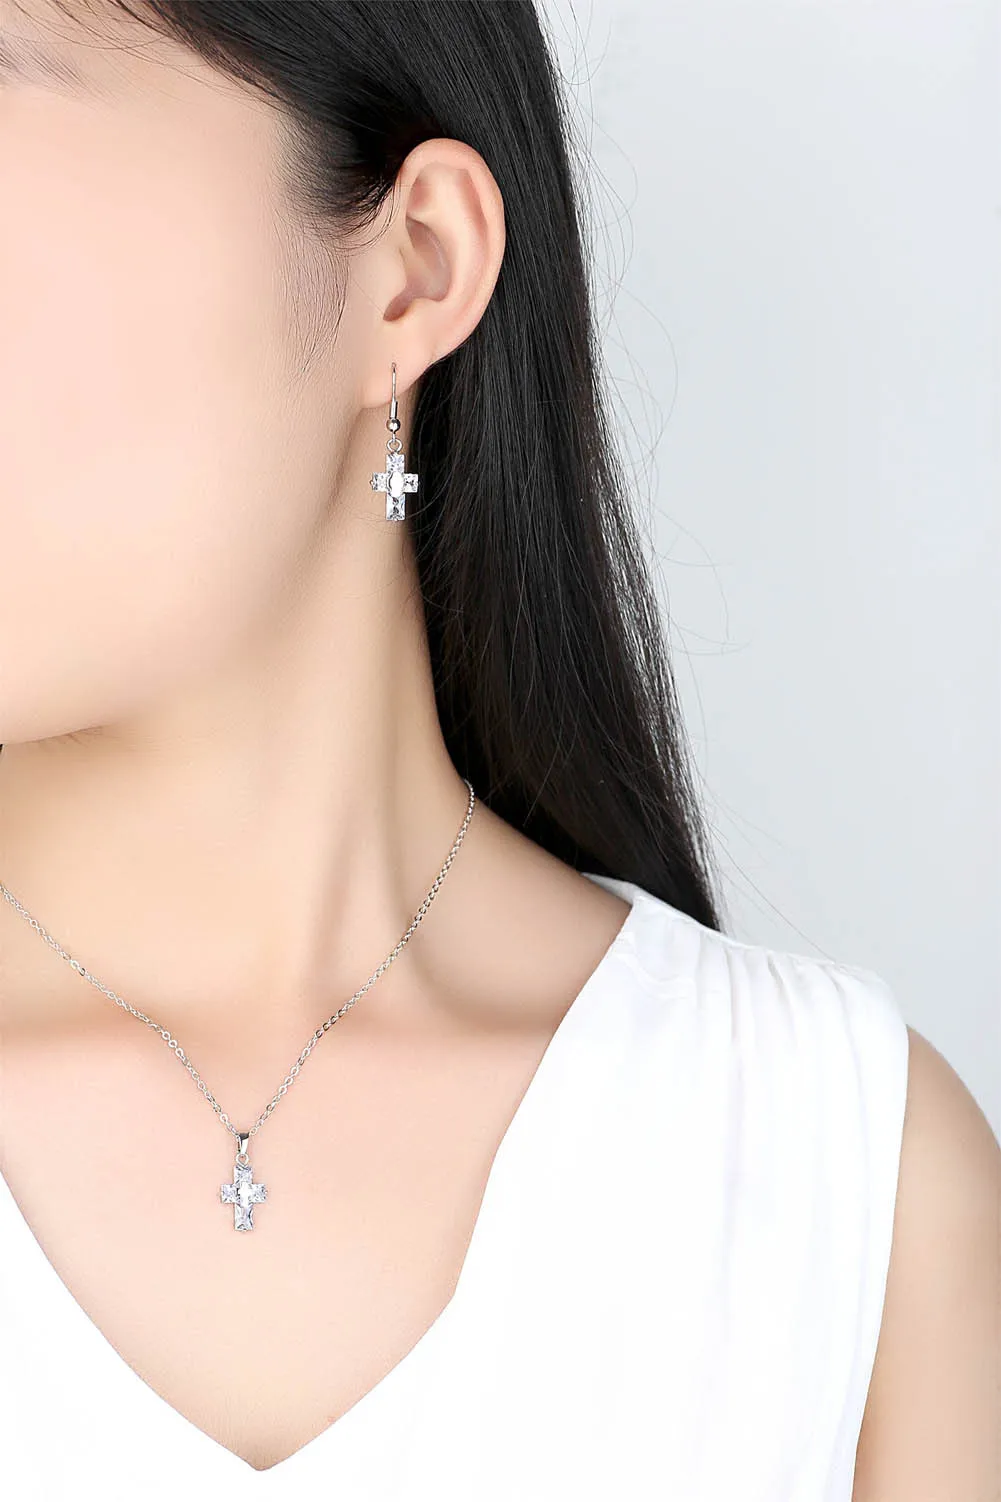 

TSHOU350 ramantic ziron blue heart earring handmade 925 Sterling silver Earrings Party Jewelry Gifts Gift Link For Buyer